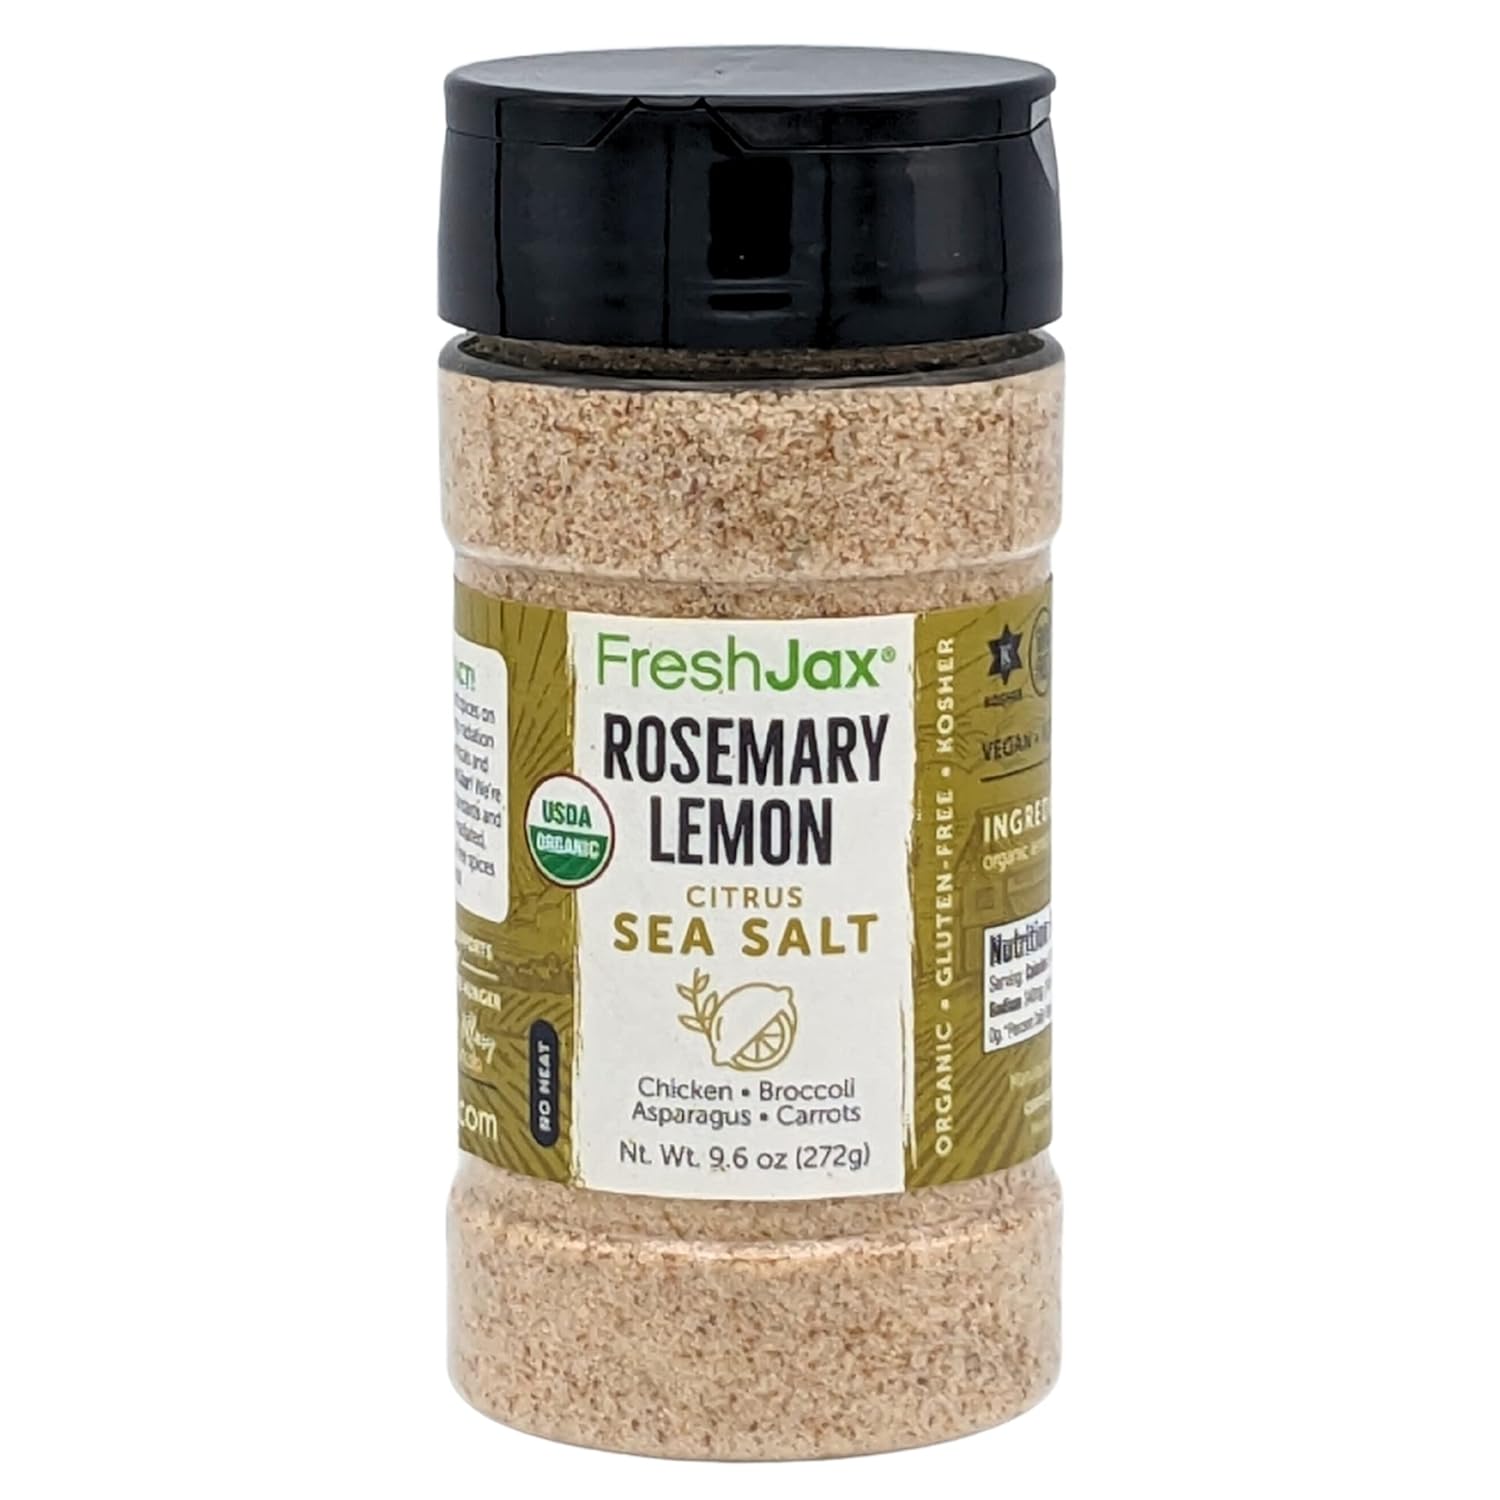 FreshJax Organic Rosemary Lemon Citrus Sea Salt (9.6 oz Bottle) Non GMO, Gluten Free, Keto, Paleo, No Preservatives rosemary lemon seasoning | Handcrafted in Jacksonville | Premium Gourmet Spices and Seasonings